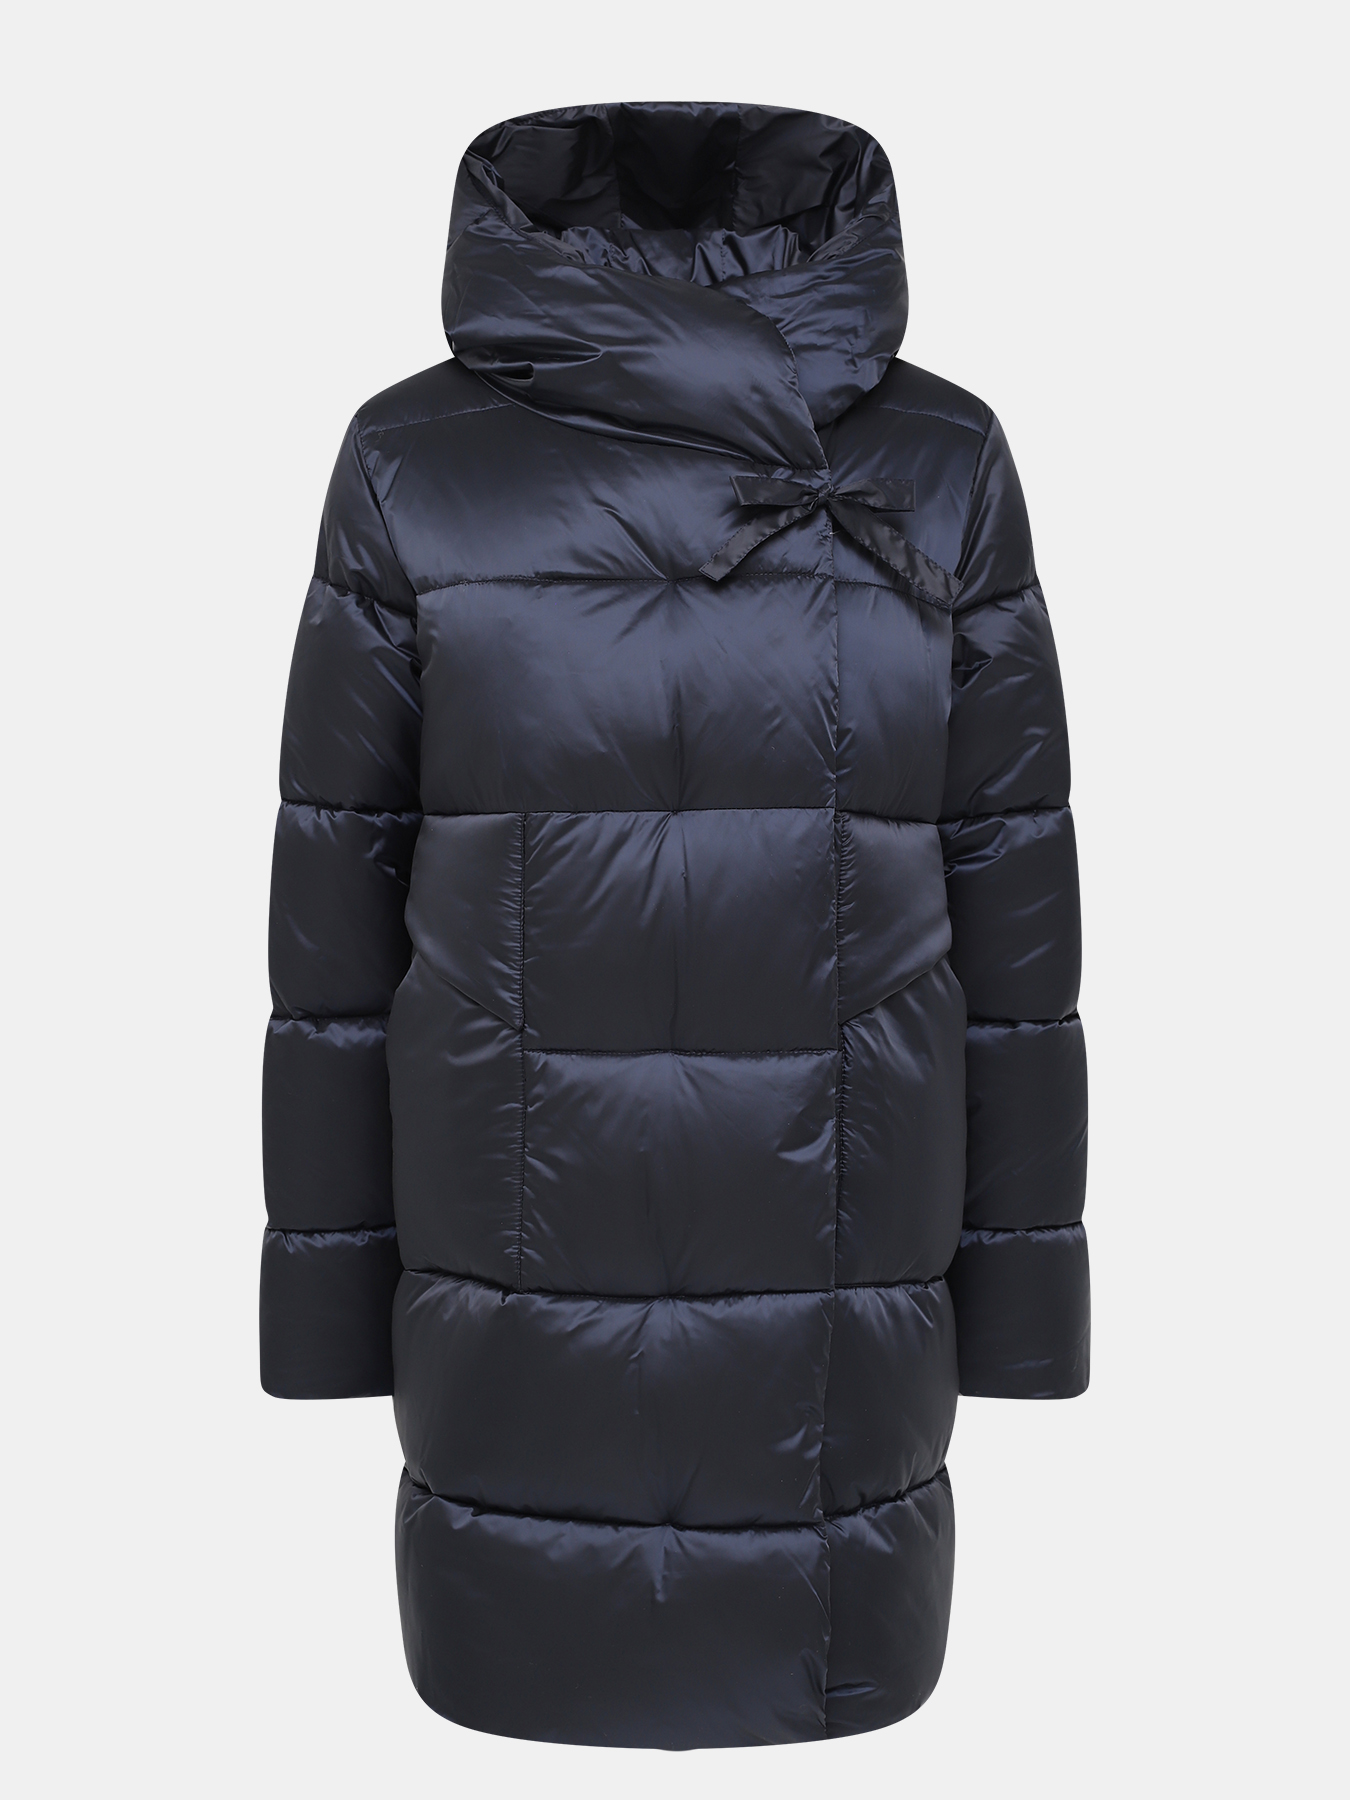 Пальто зимнее Maritta 433530-018, цвет темно-синий, размер 36